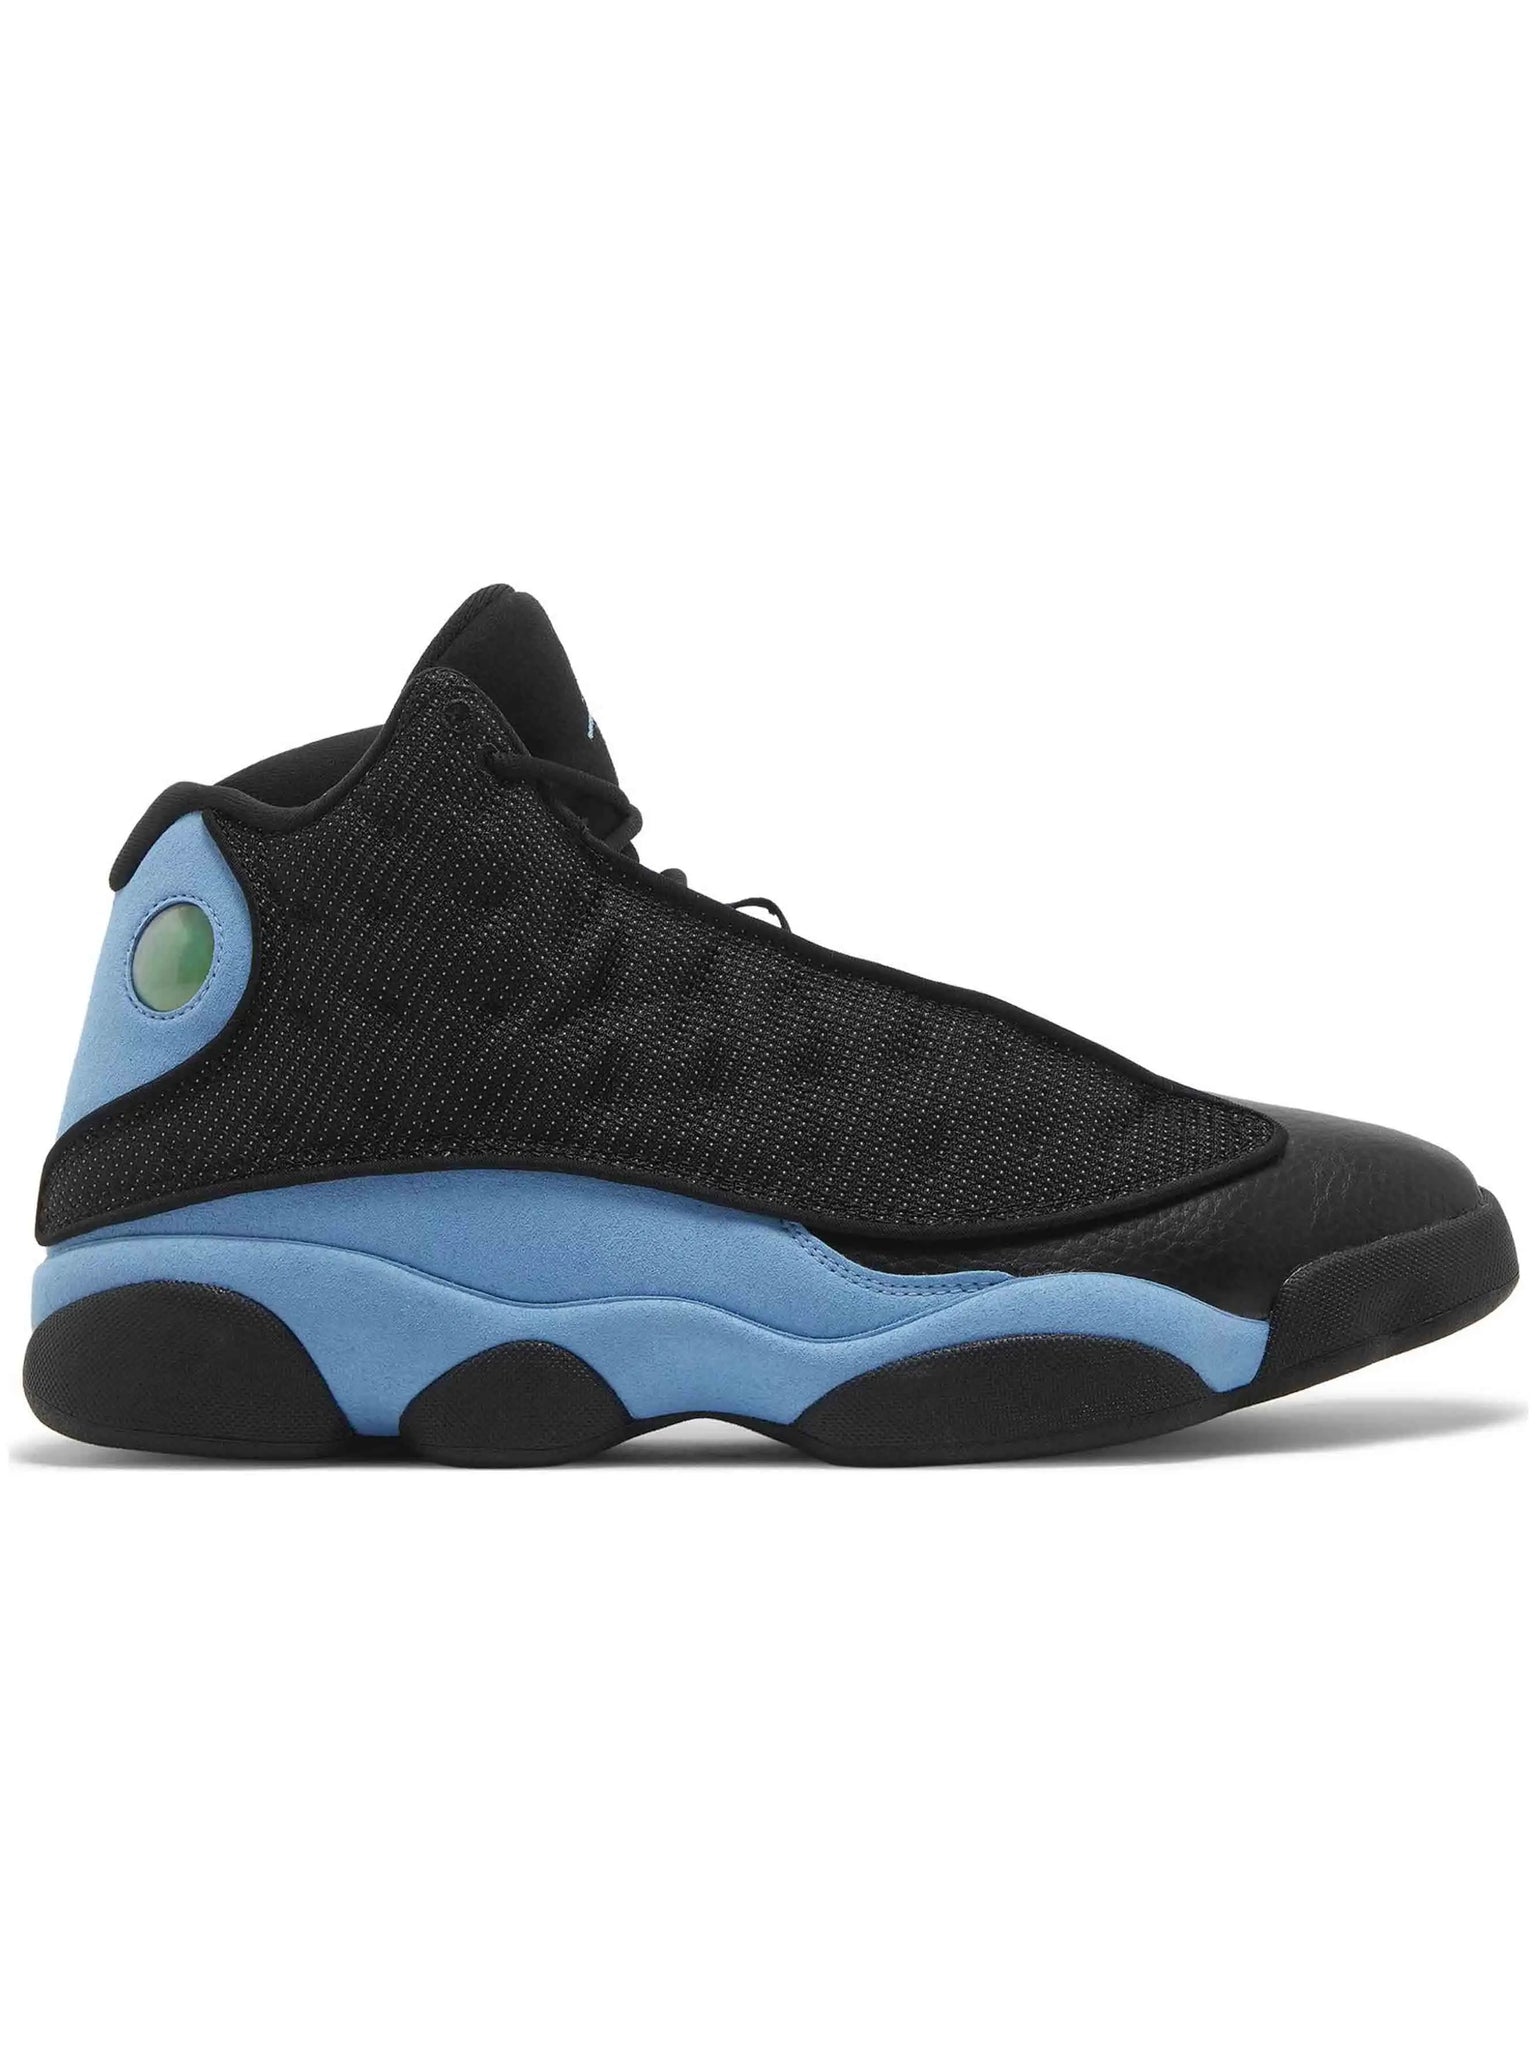 Nike Air Jordan 13 Retro Black University Blue Prior